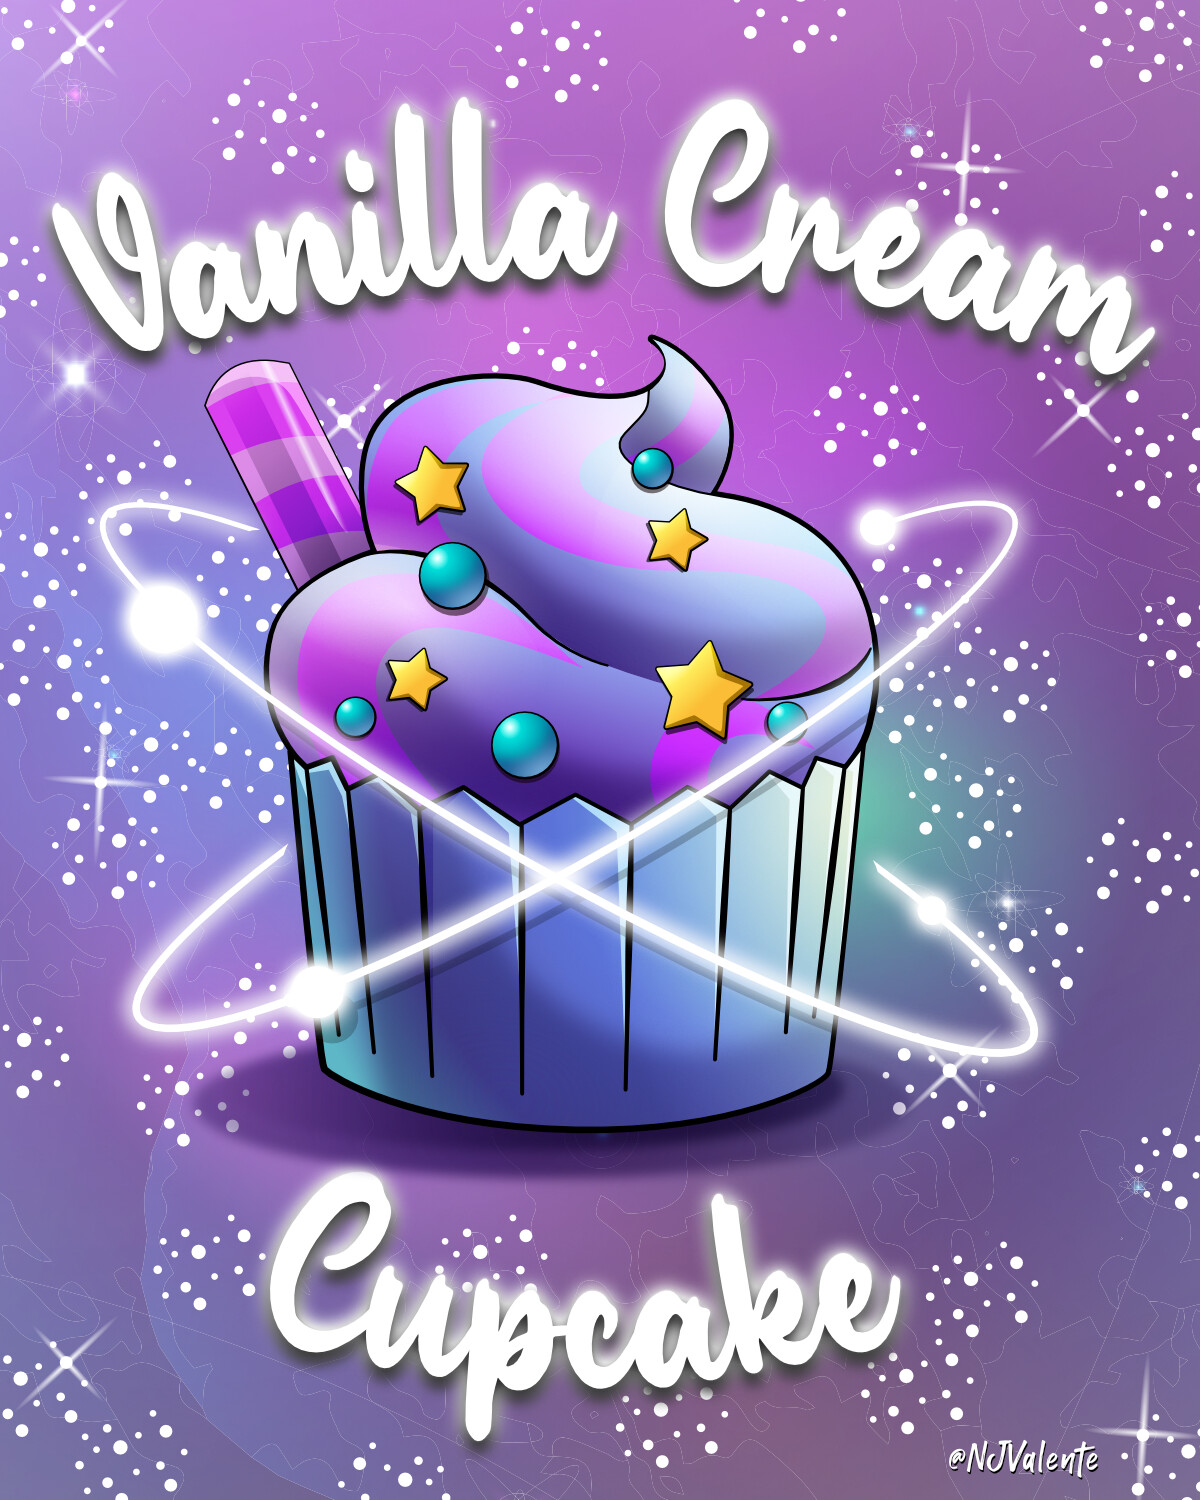 Vanilla Cream Cupcake Product Packaging Design